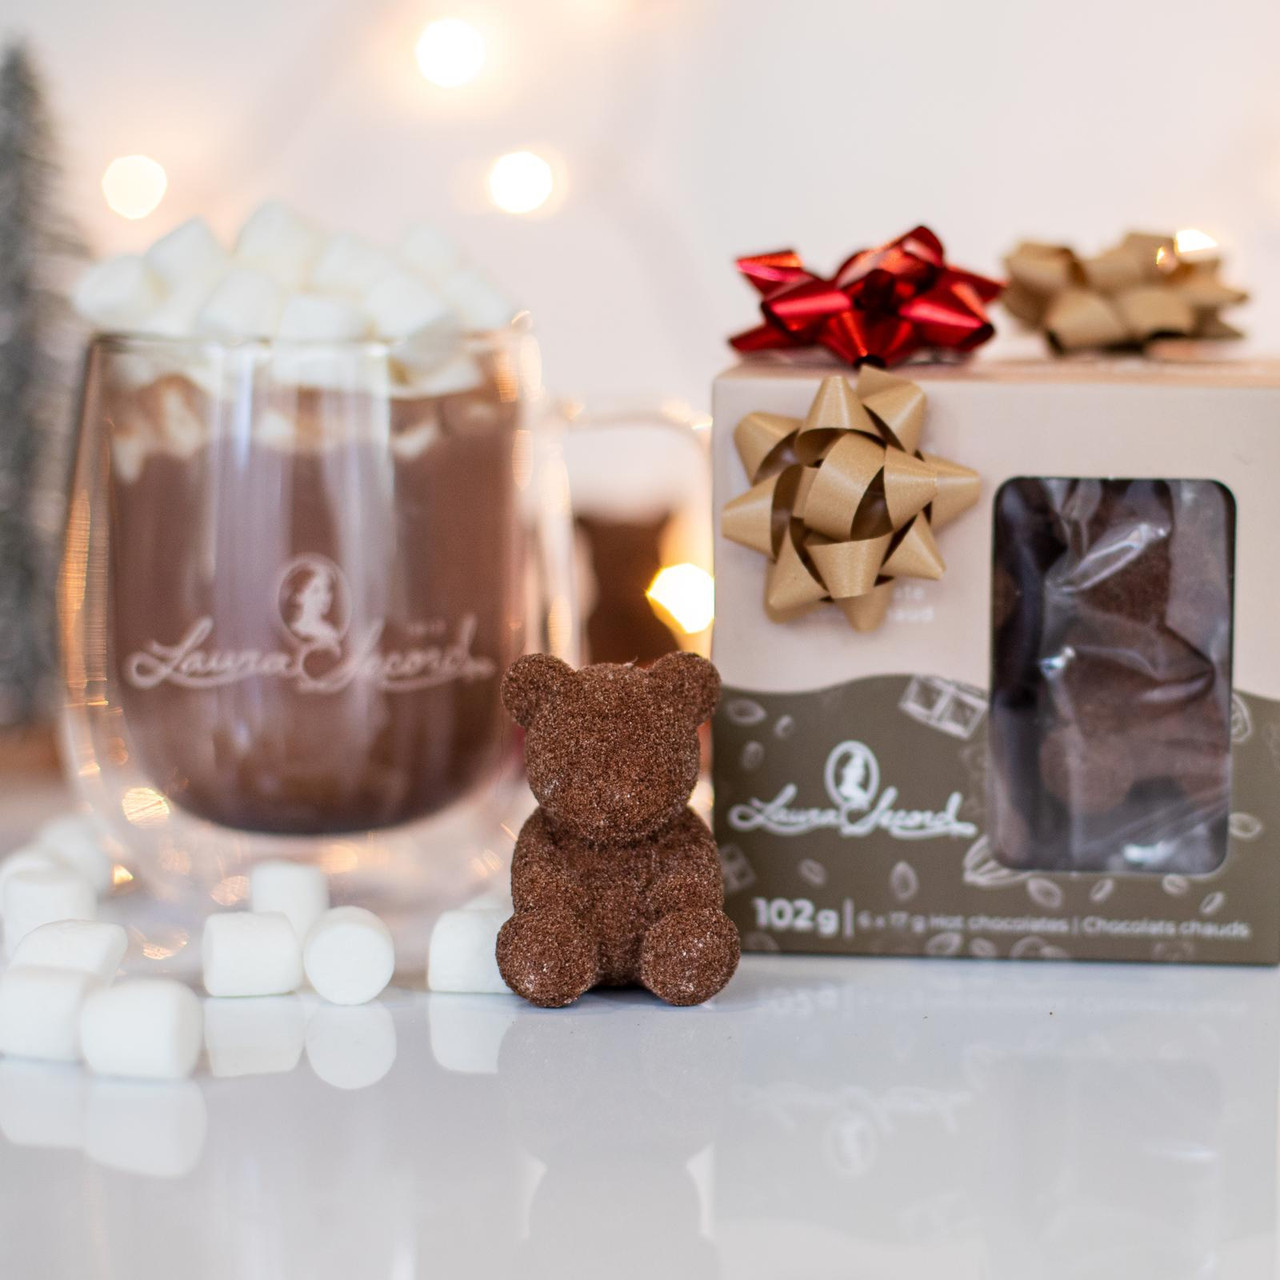 Produits - Type de chocolat - Menthe - Laura Secord Chocolats